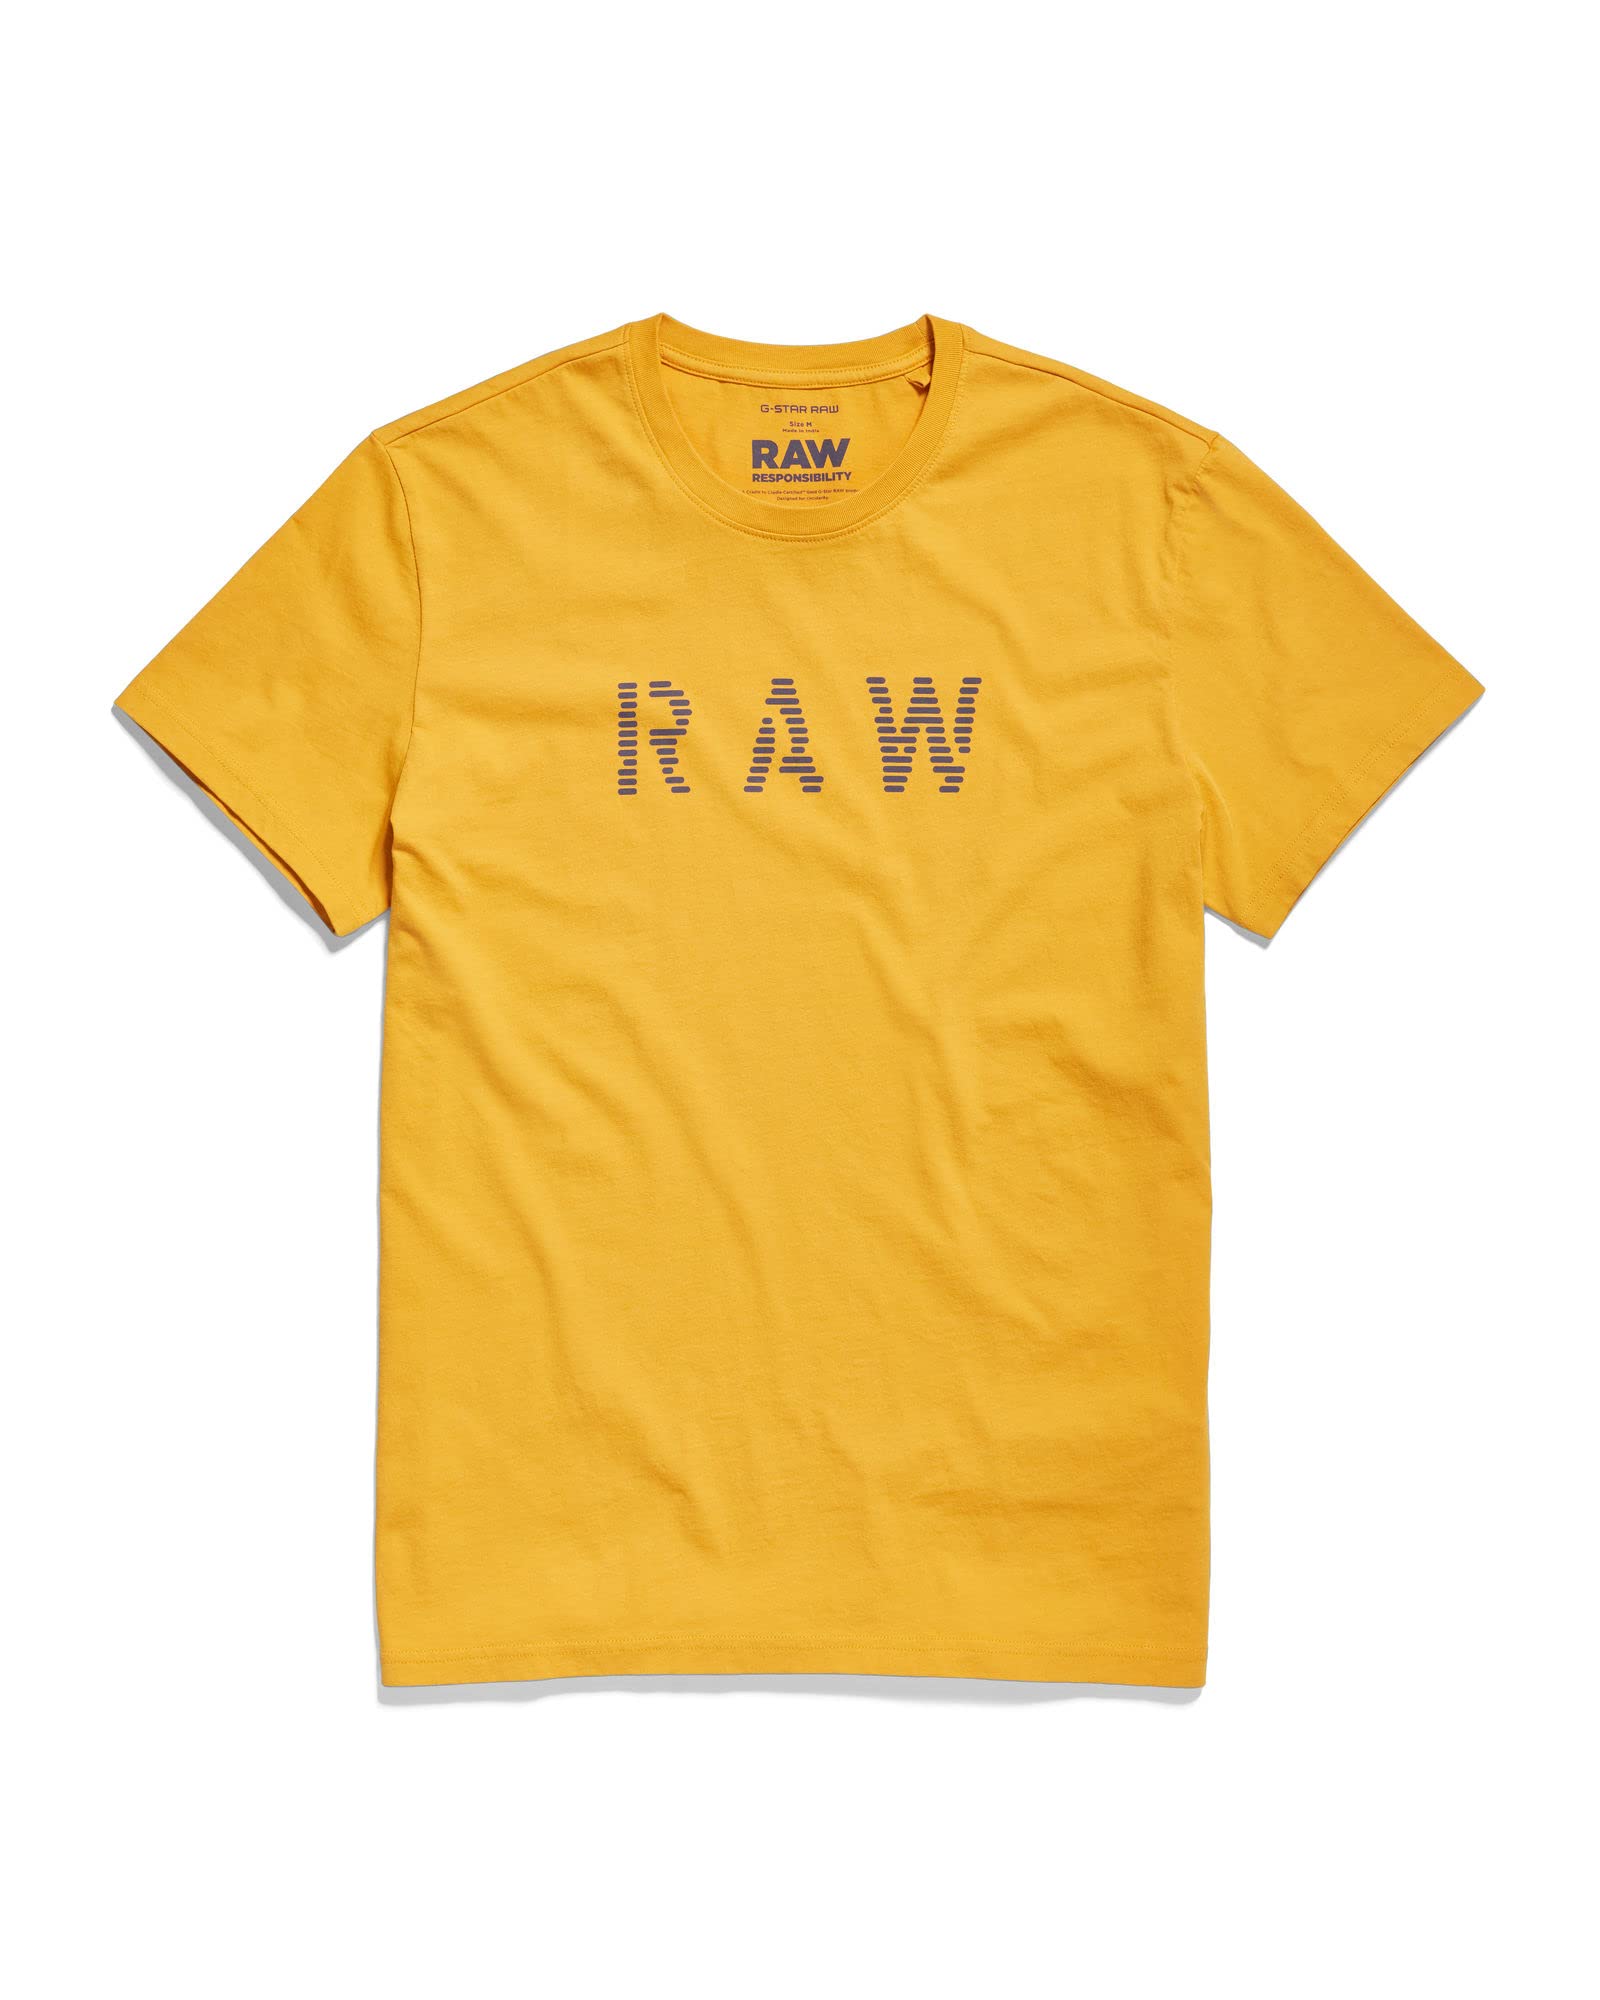 G-STAR RAW Men's Holorn Graphic Crew Neck Short Sleeve T-Shirt